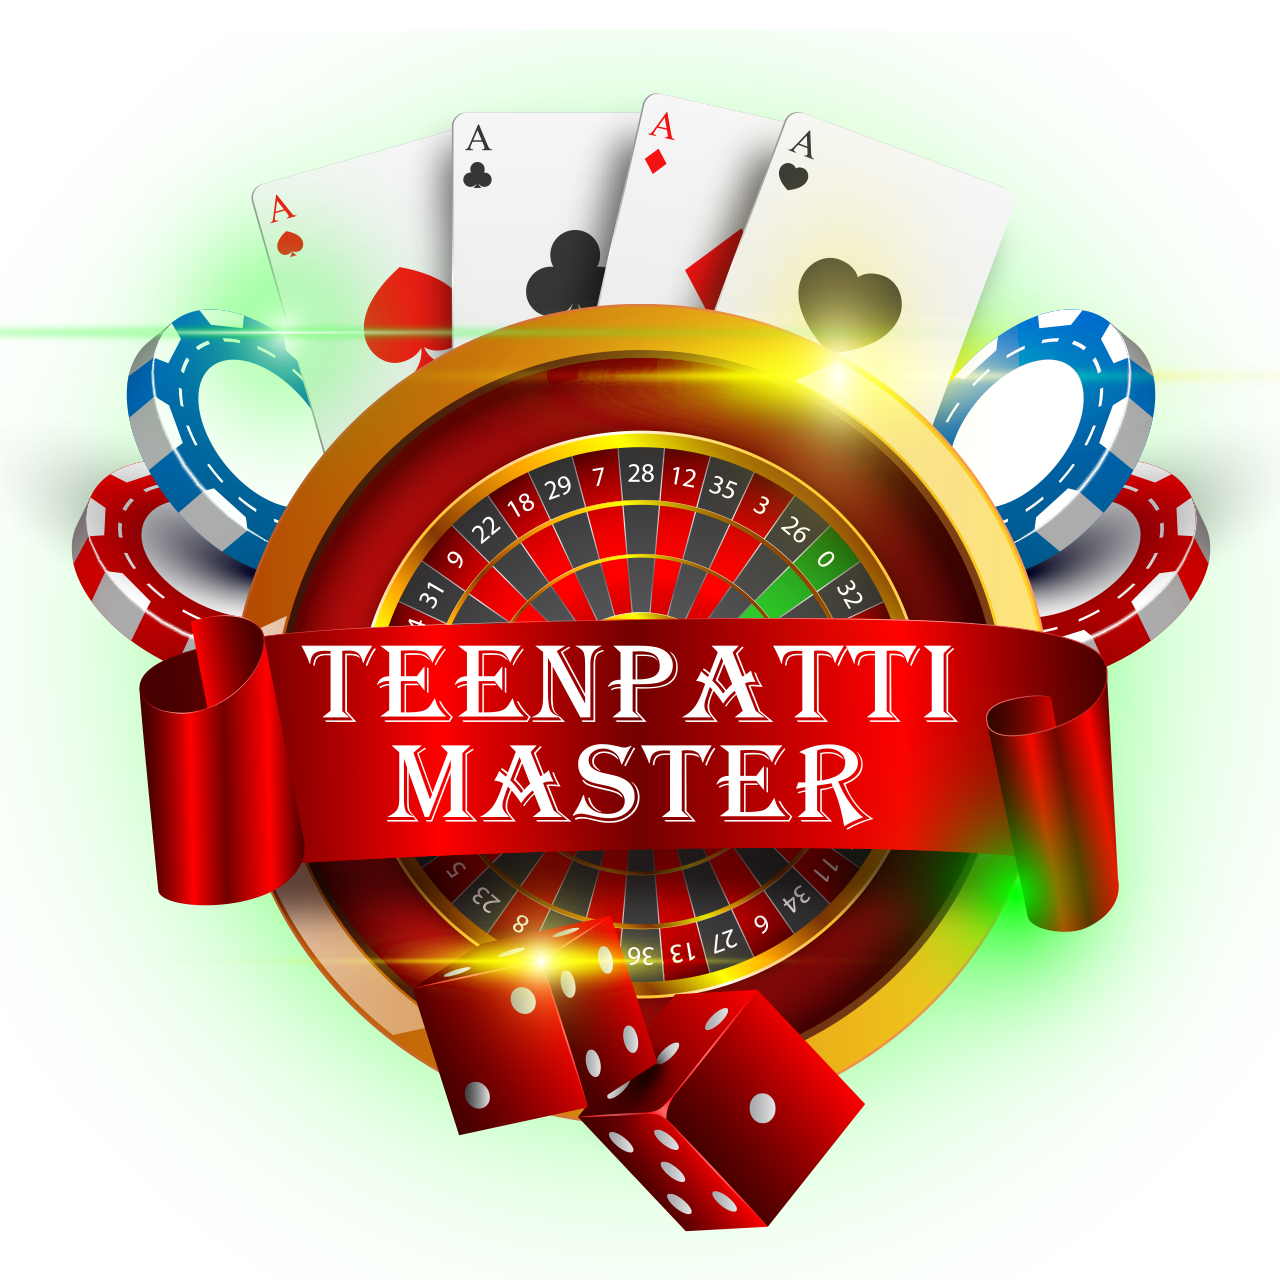 Download Teen Patti Master App & Get Real Cash ₹1500+